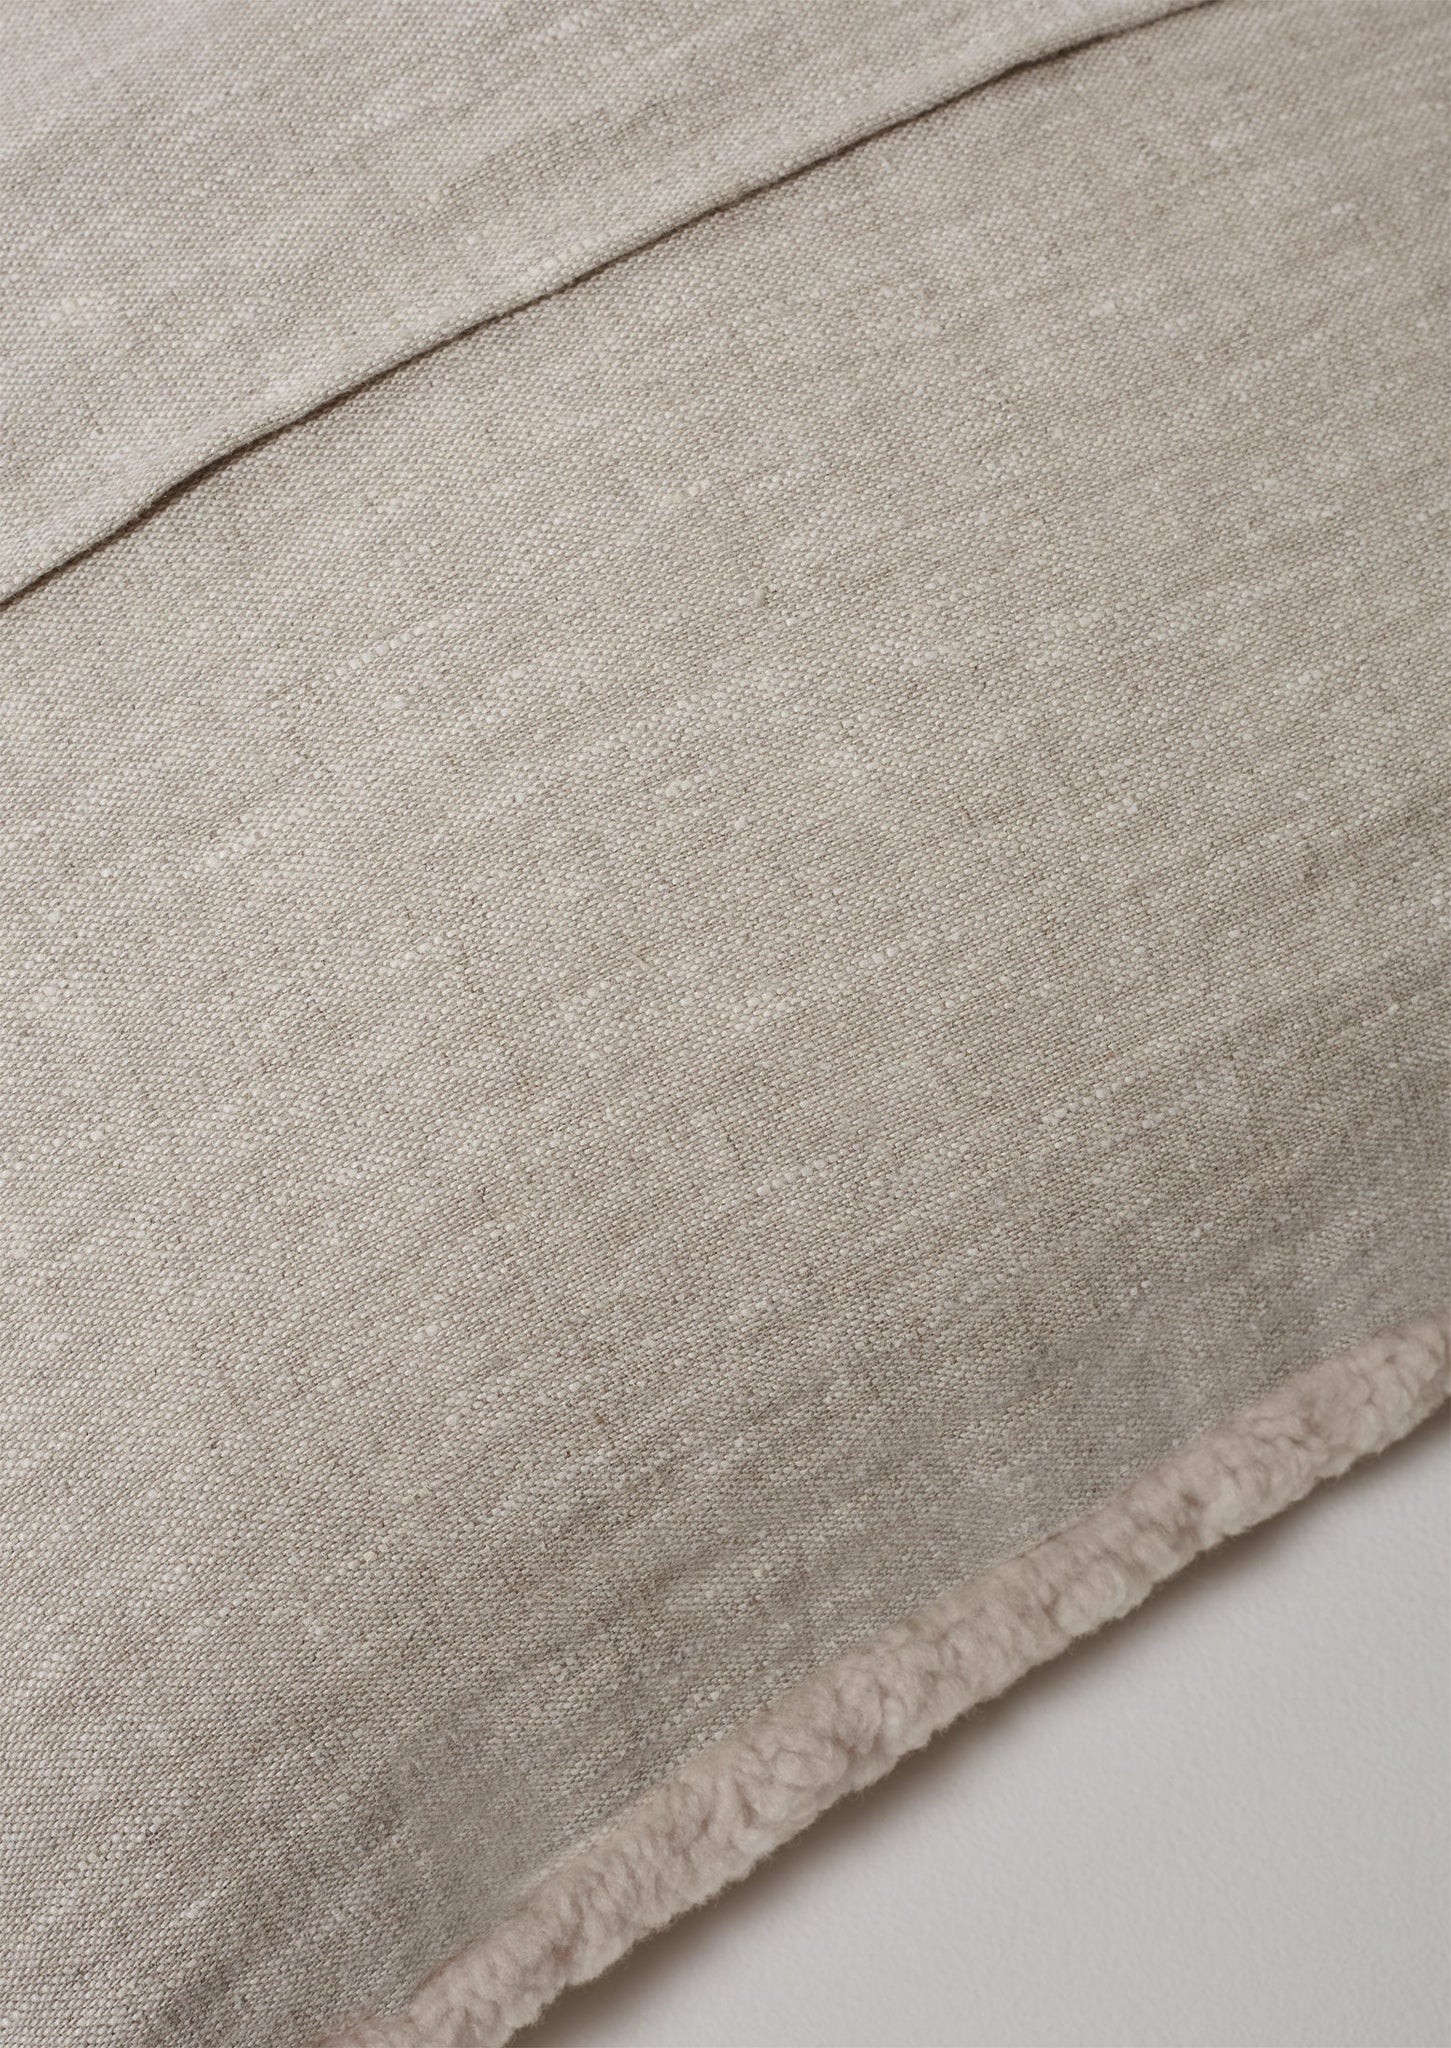 Sheepskin Pillow Cover | Mole/Natural